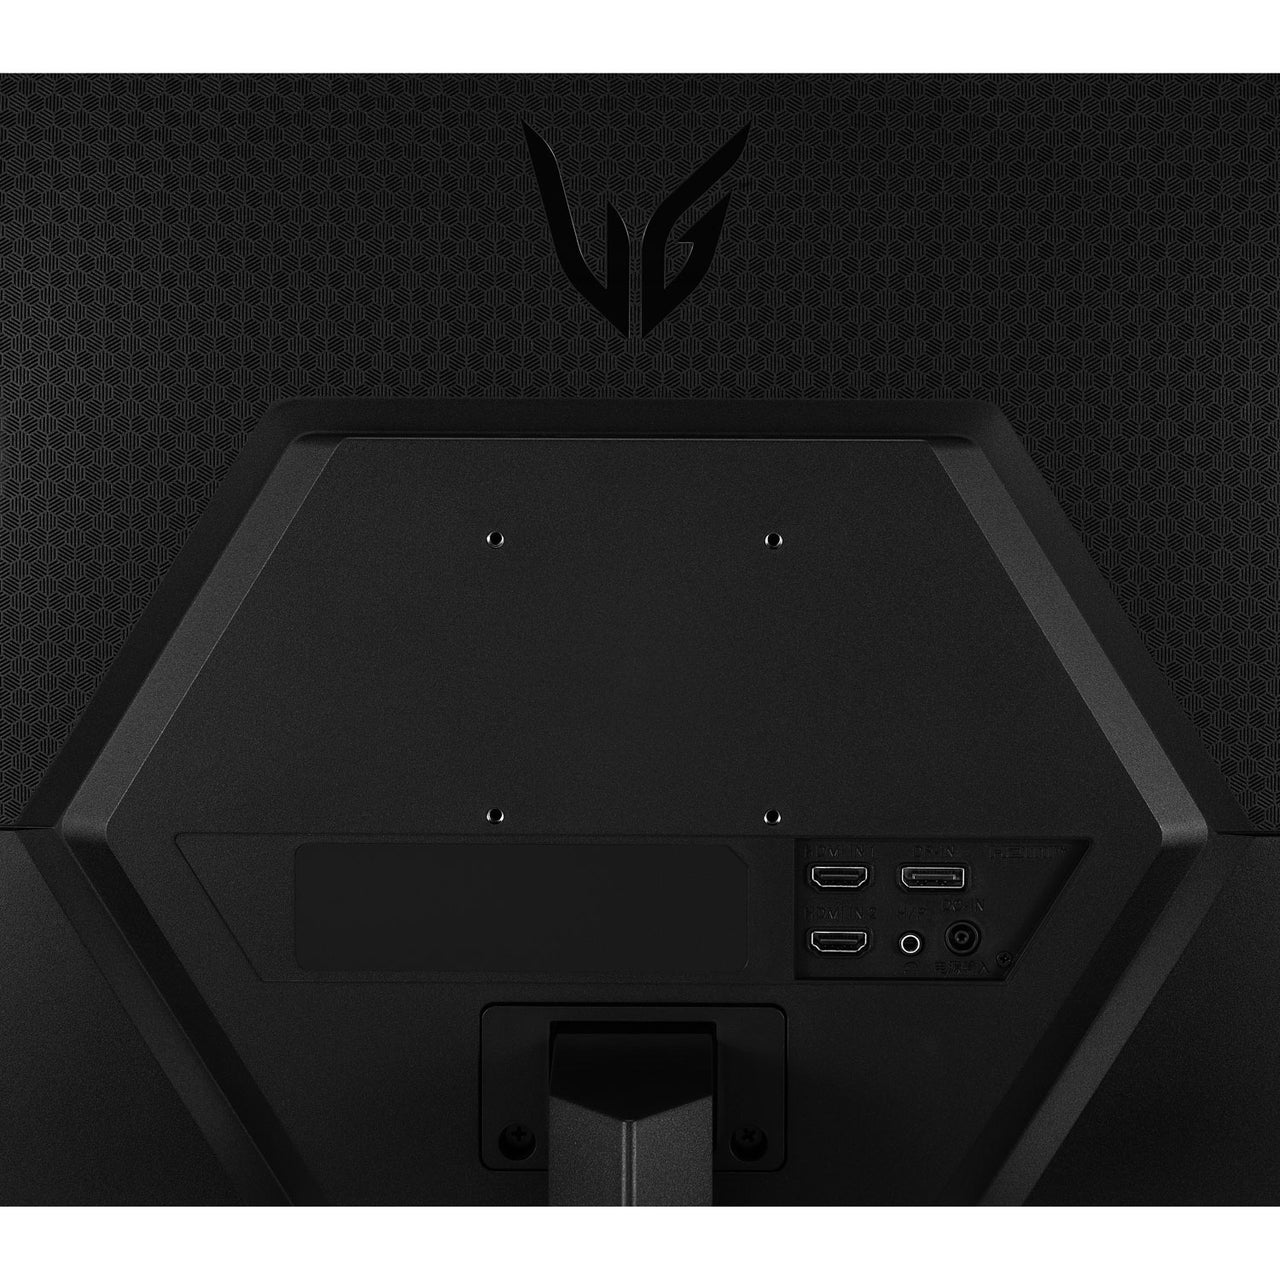 LG UltraGear 23.8" FHD 165Hz 1ms MBR VA LED FreeSync Gaming Monitor (24GQ50F-B) - Black